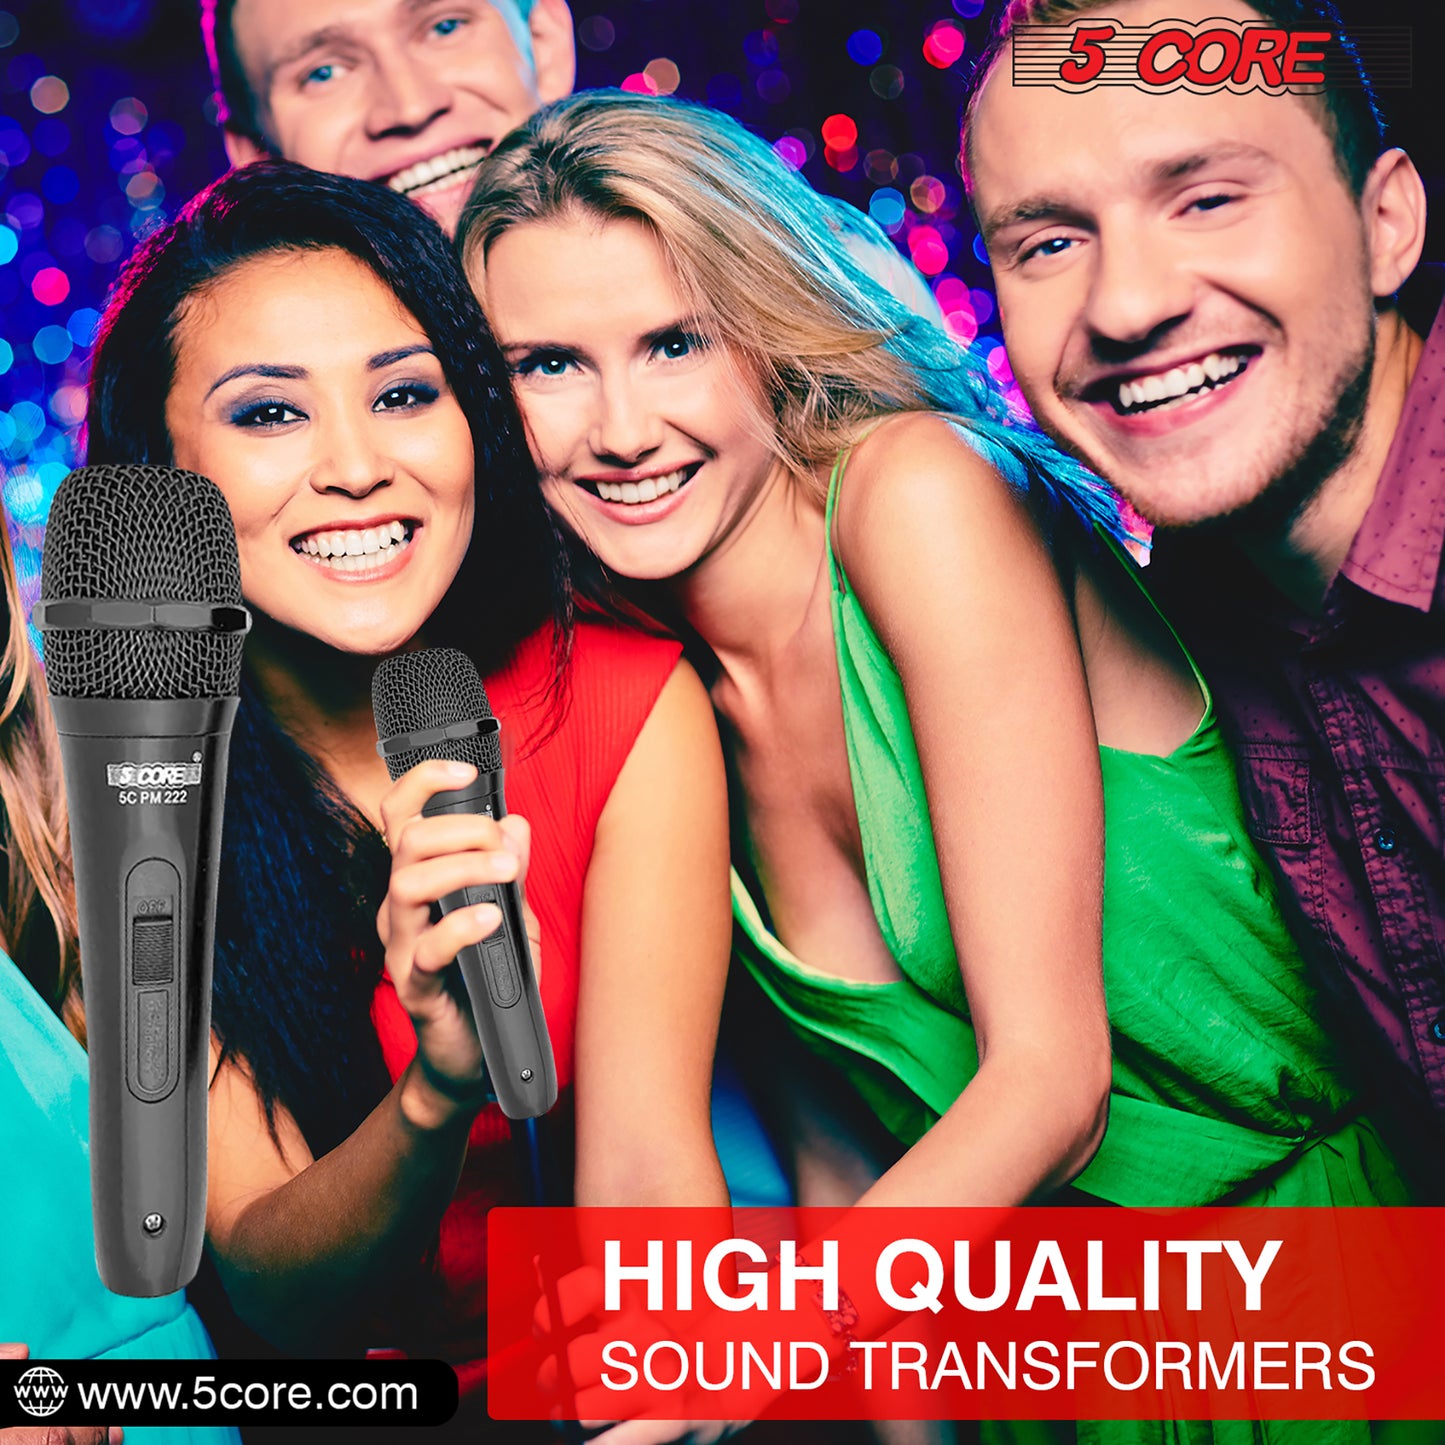 5 Core Professional Dynamic Cardiod Microphone | EastTone® - Stringspeed